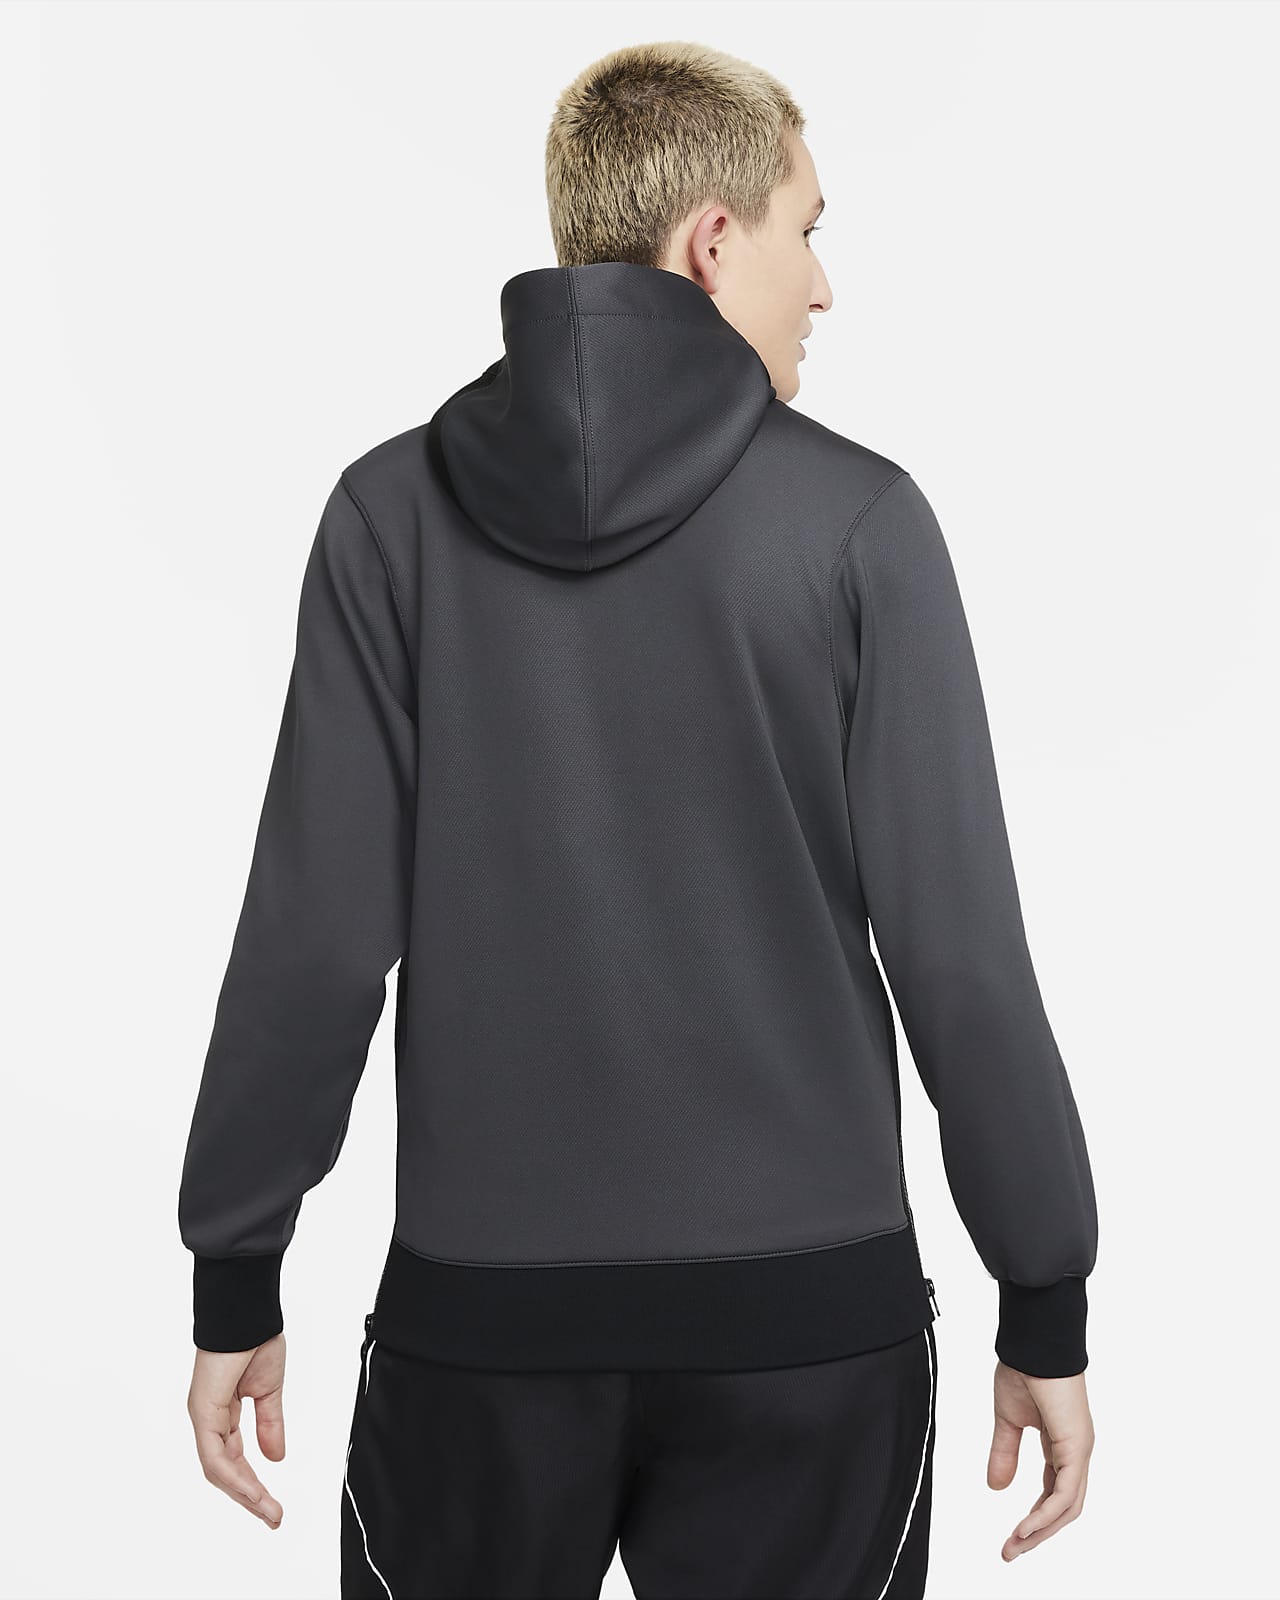 WMNS Nike Fleece Track Top - 'Anthracite/Black